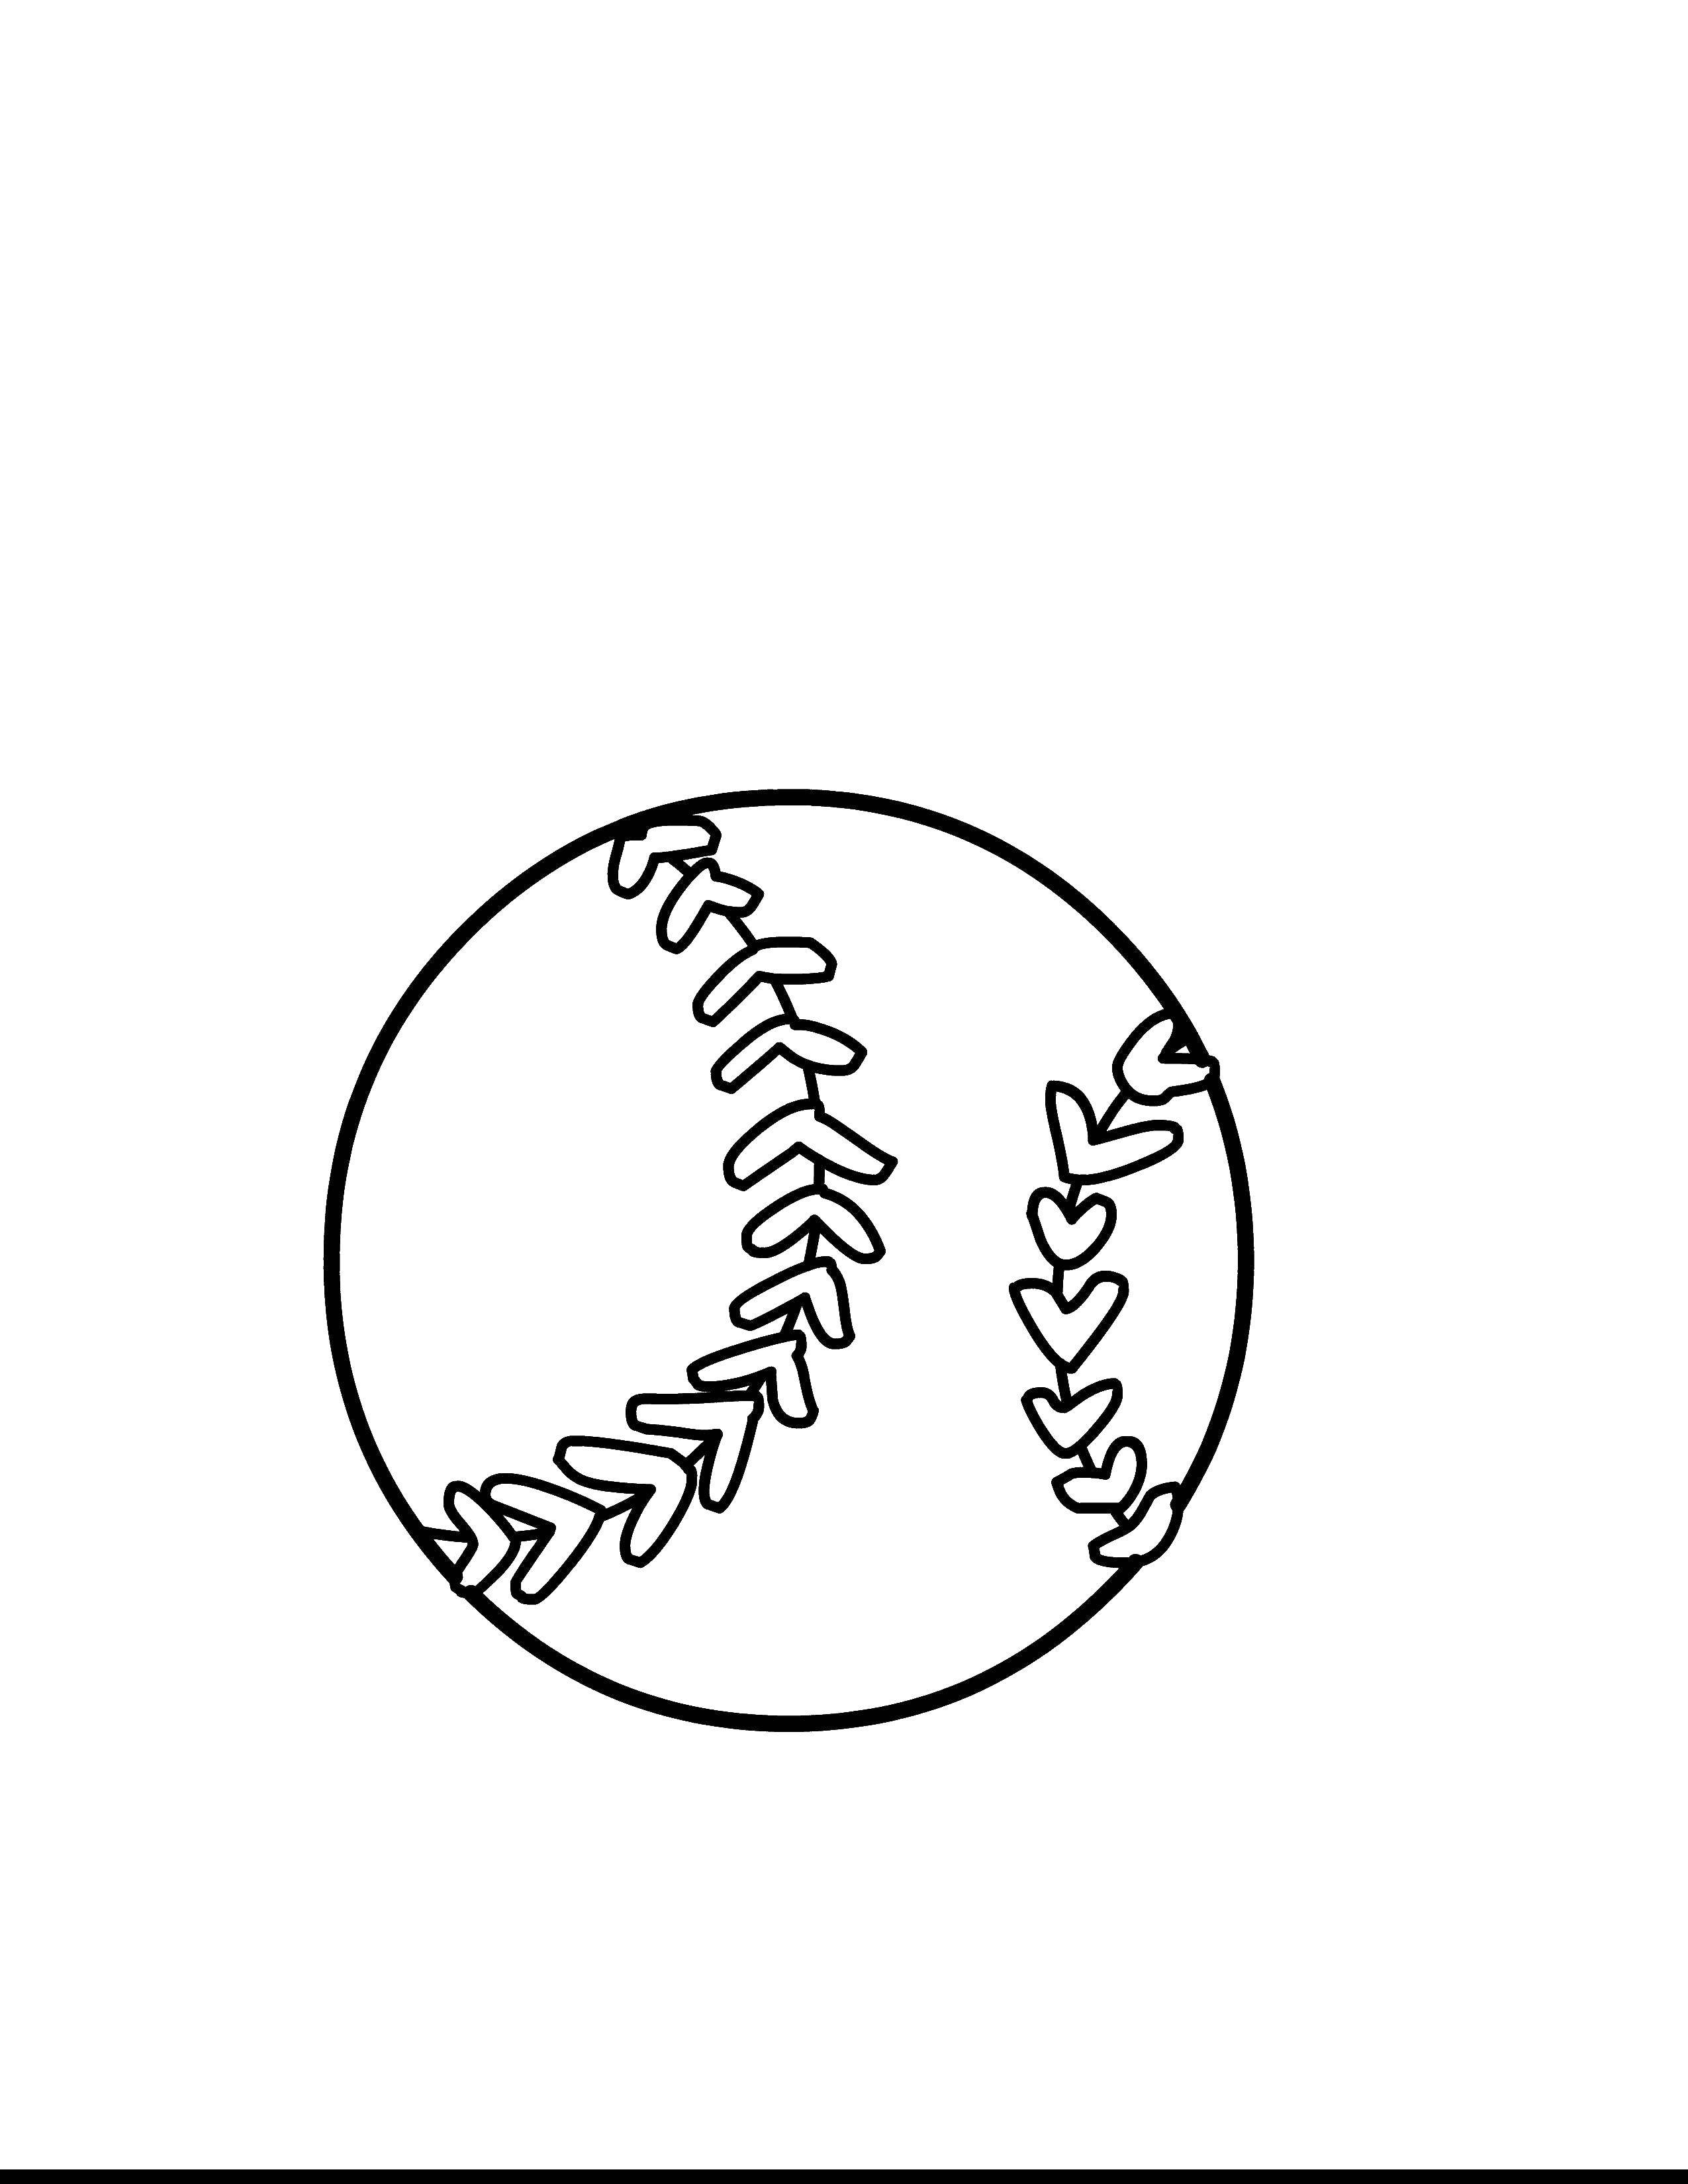 Coloring Baseball. Category Sports. Tags:  Sports, baseball.